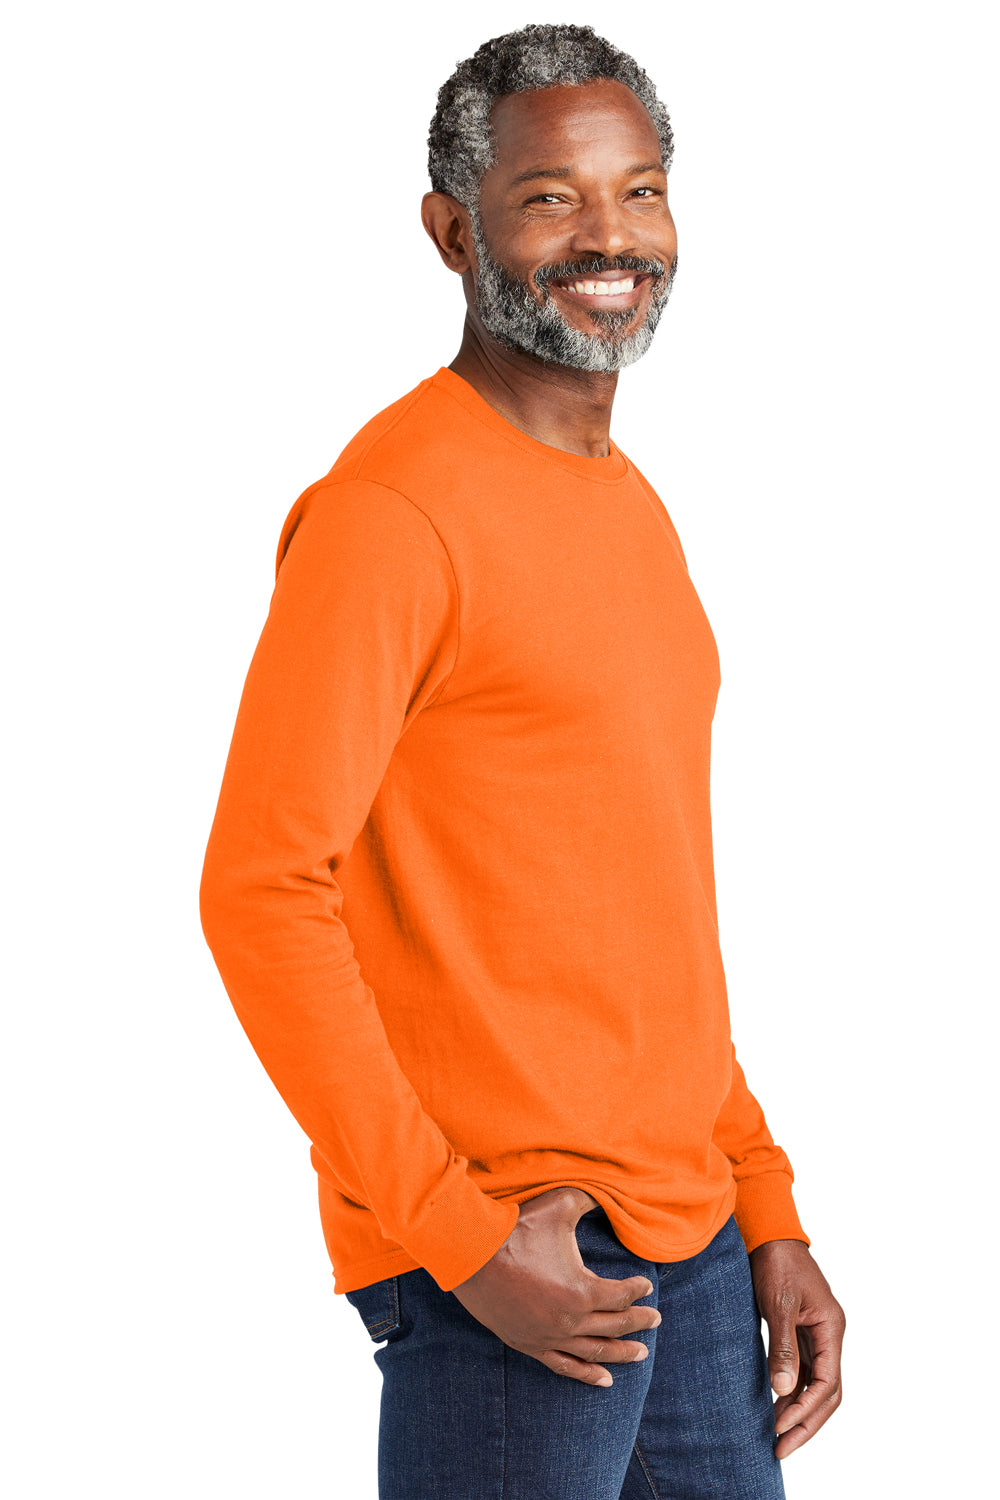 Volunteer Knitwear VL100LS USA Made All American Long Sleeve Crewneck T-Shirts Safety Orange Side